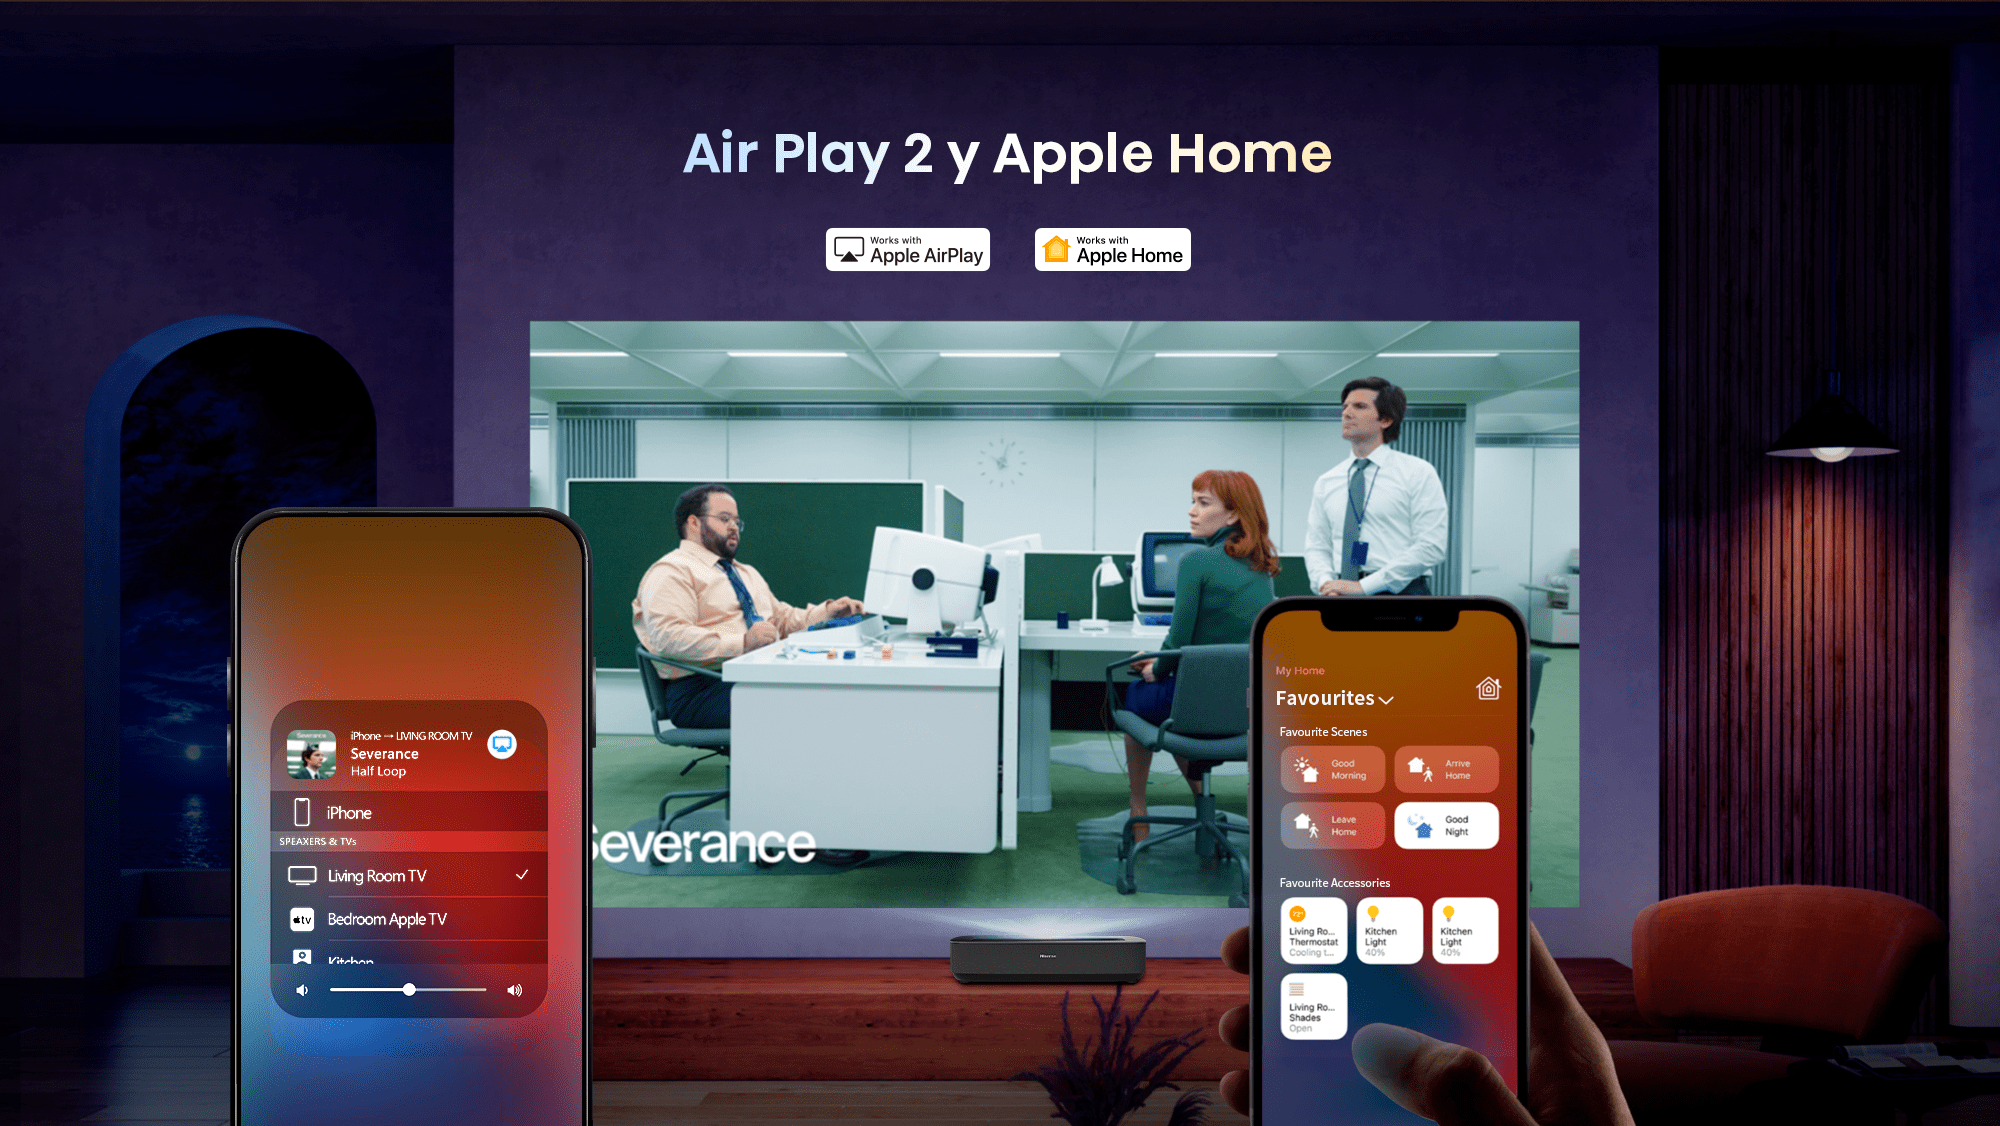 Air Play 2 y Apple Home